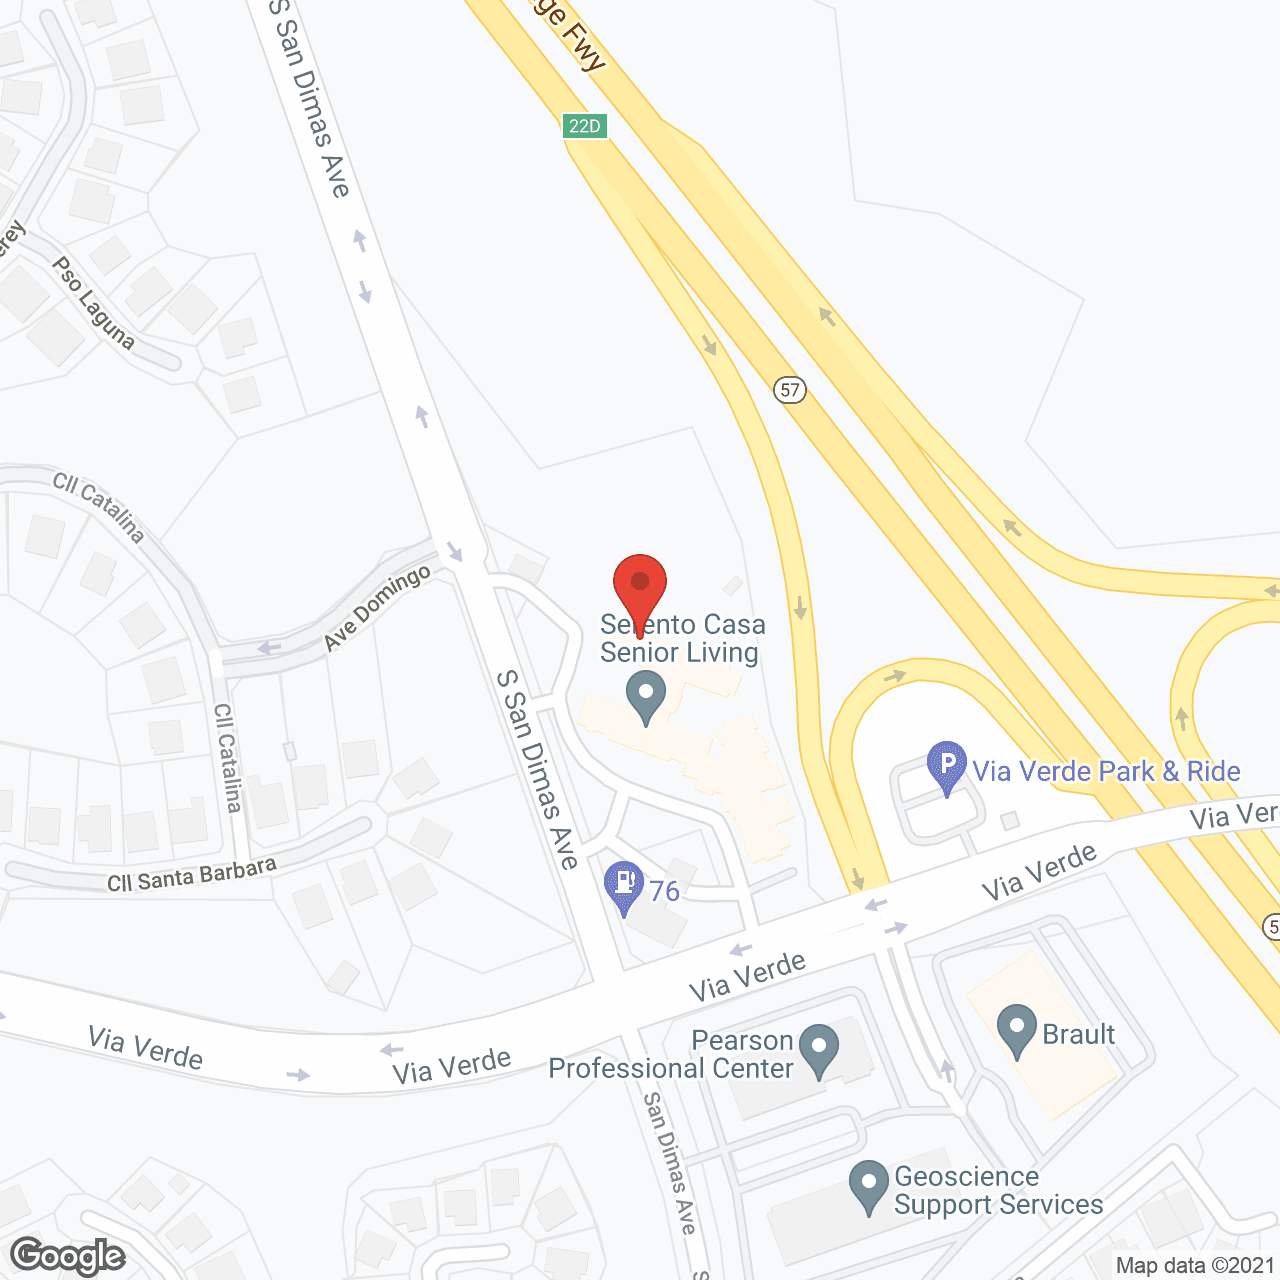 Serento Casa in google map